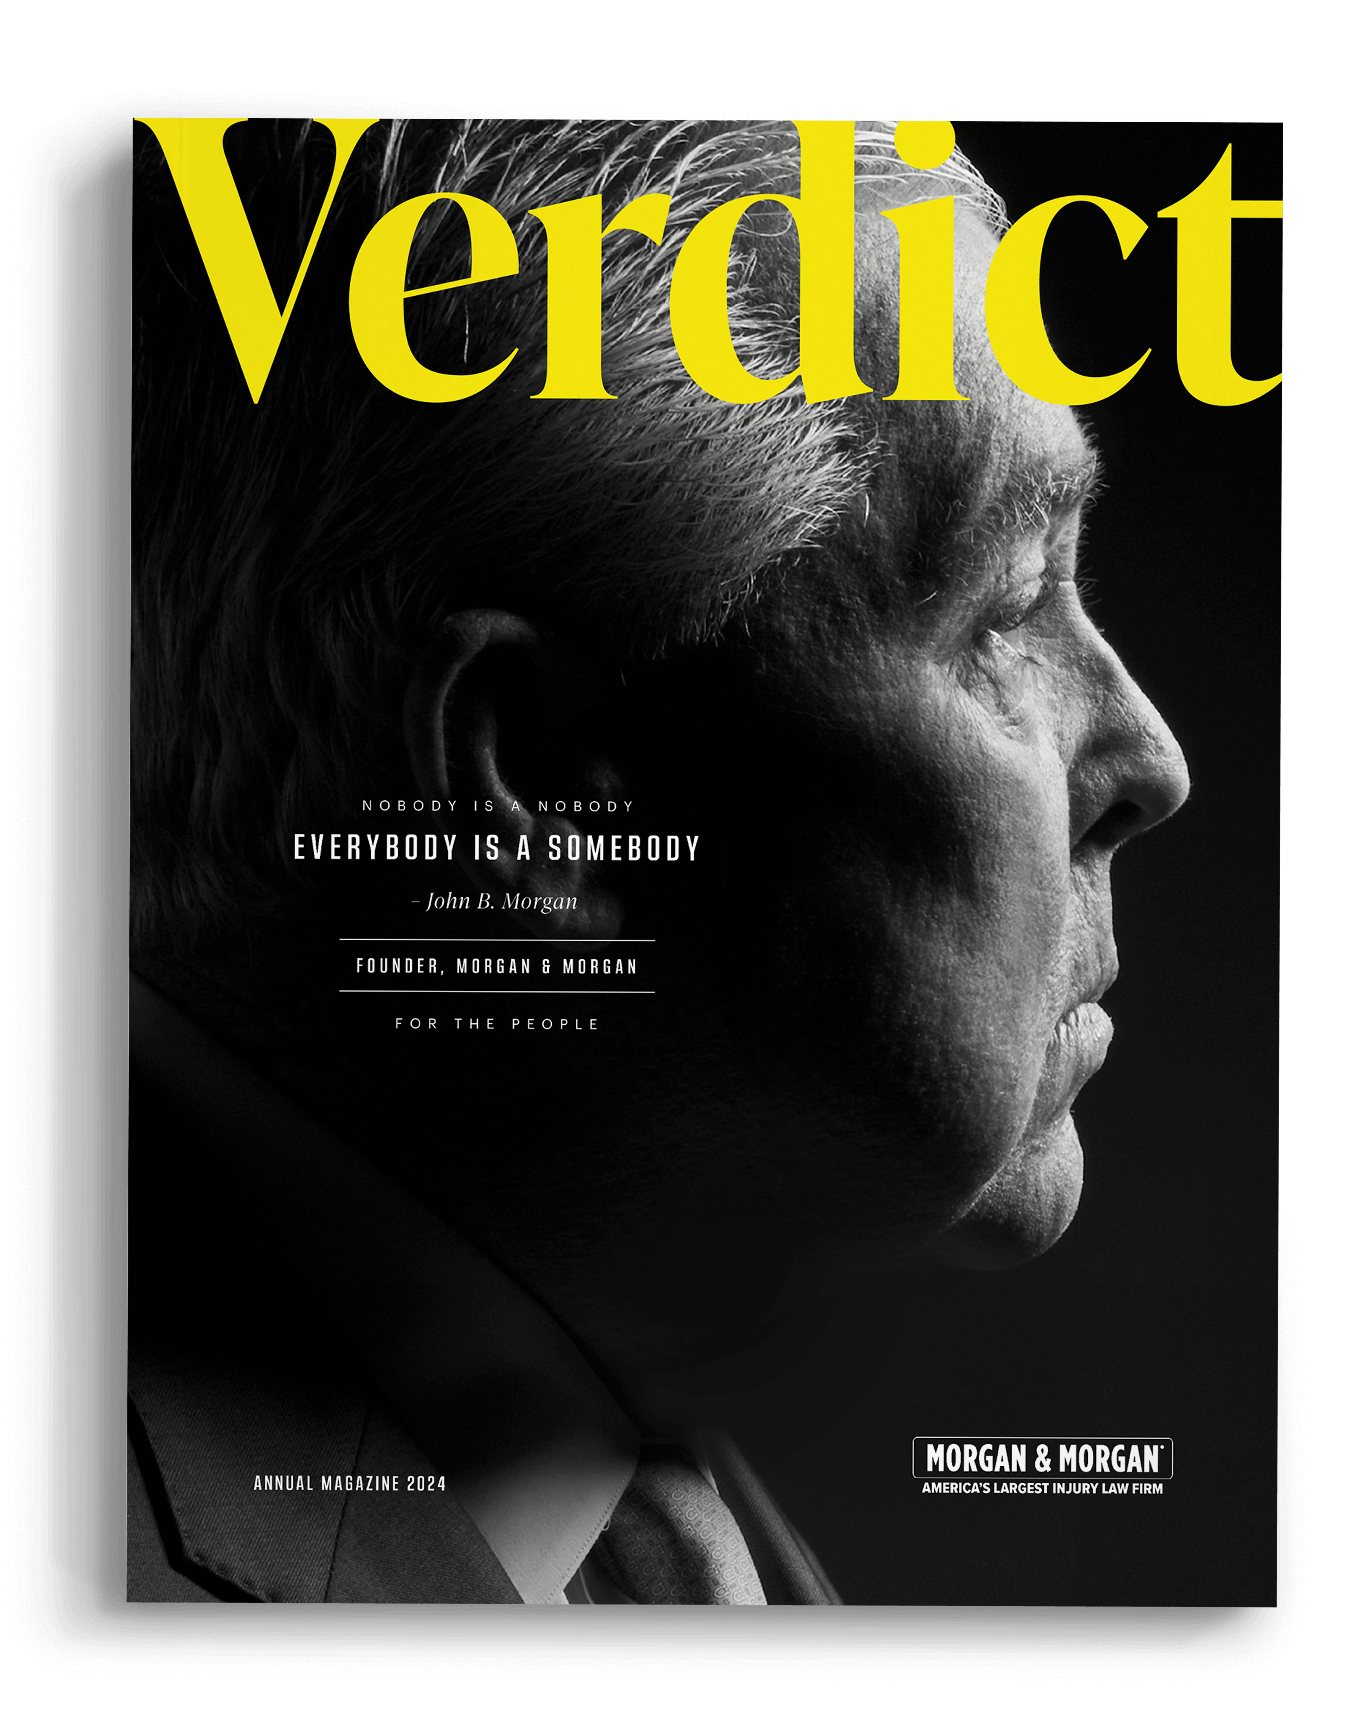 John Morgan on the cover of Verdict Magazine